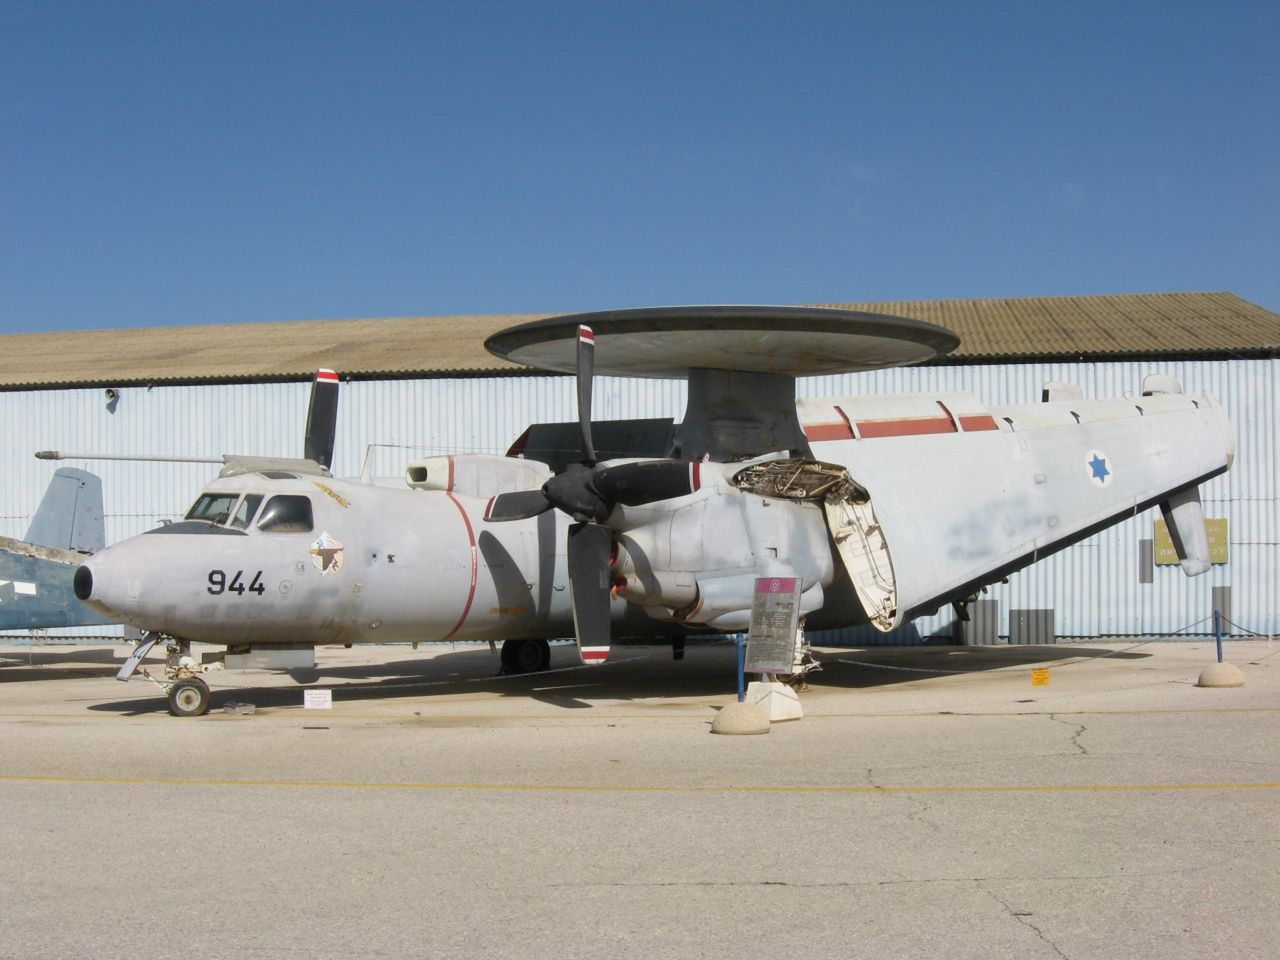 Izraelski AWACS E-2 - obecnie w muzeum